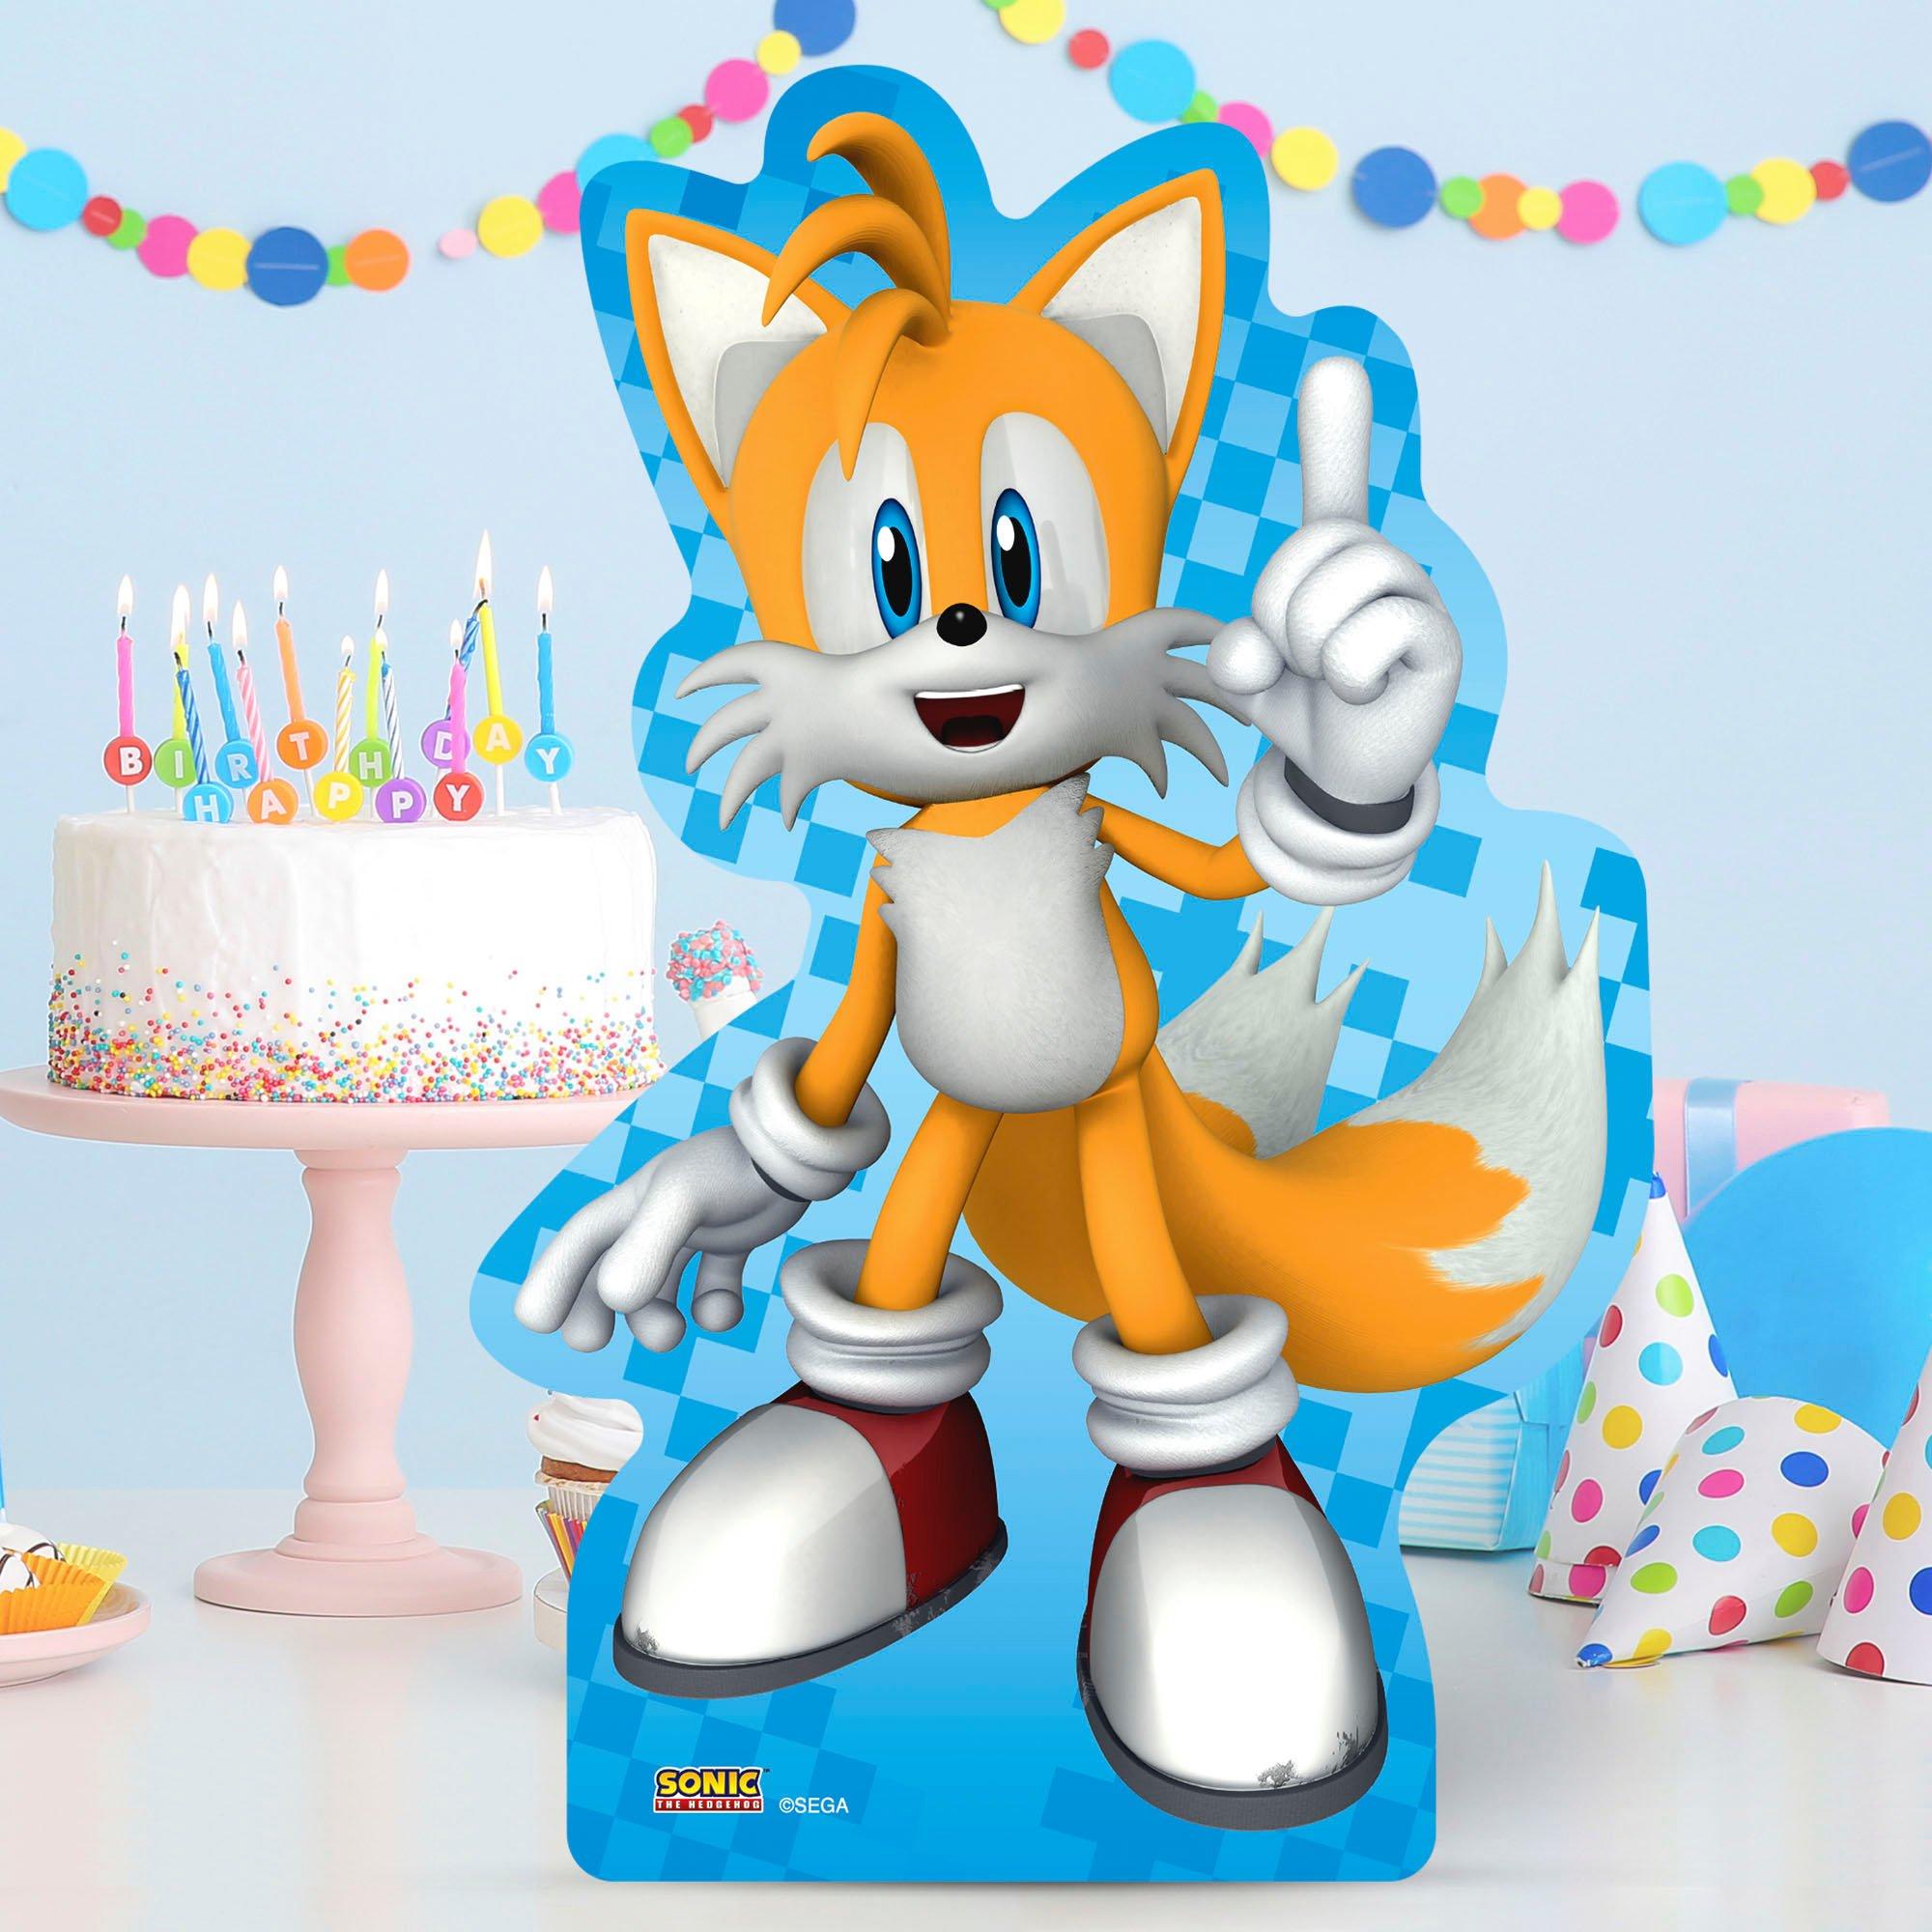 Sonic The Hedgehog Deluxe Birthday Cake Topper Set **BRAND NEW**